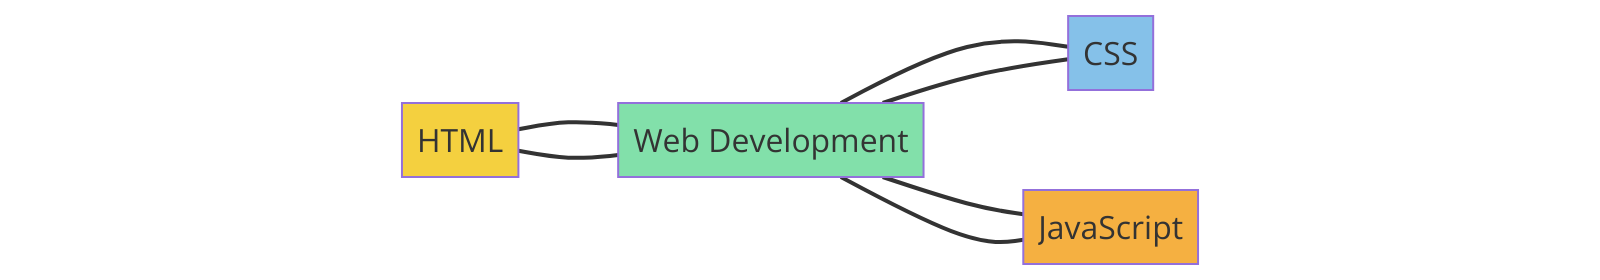 HTML, CSS, JavaScript Interaction Diagram: A Venn diagram illustrating how HTML, CSS, and JavaScript overlap and interact in web development.